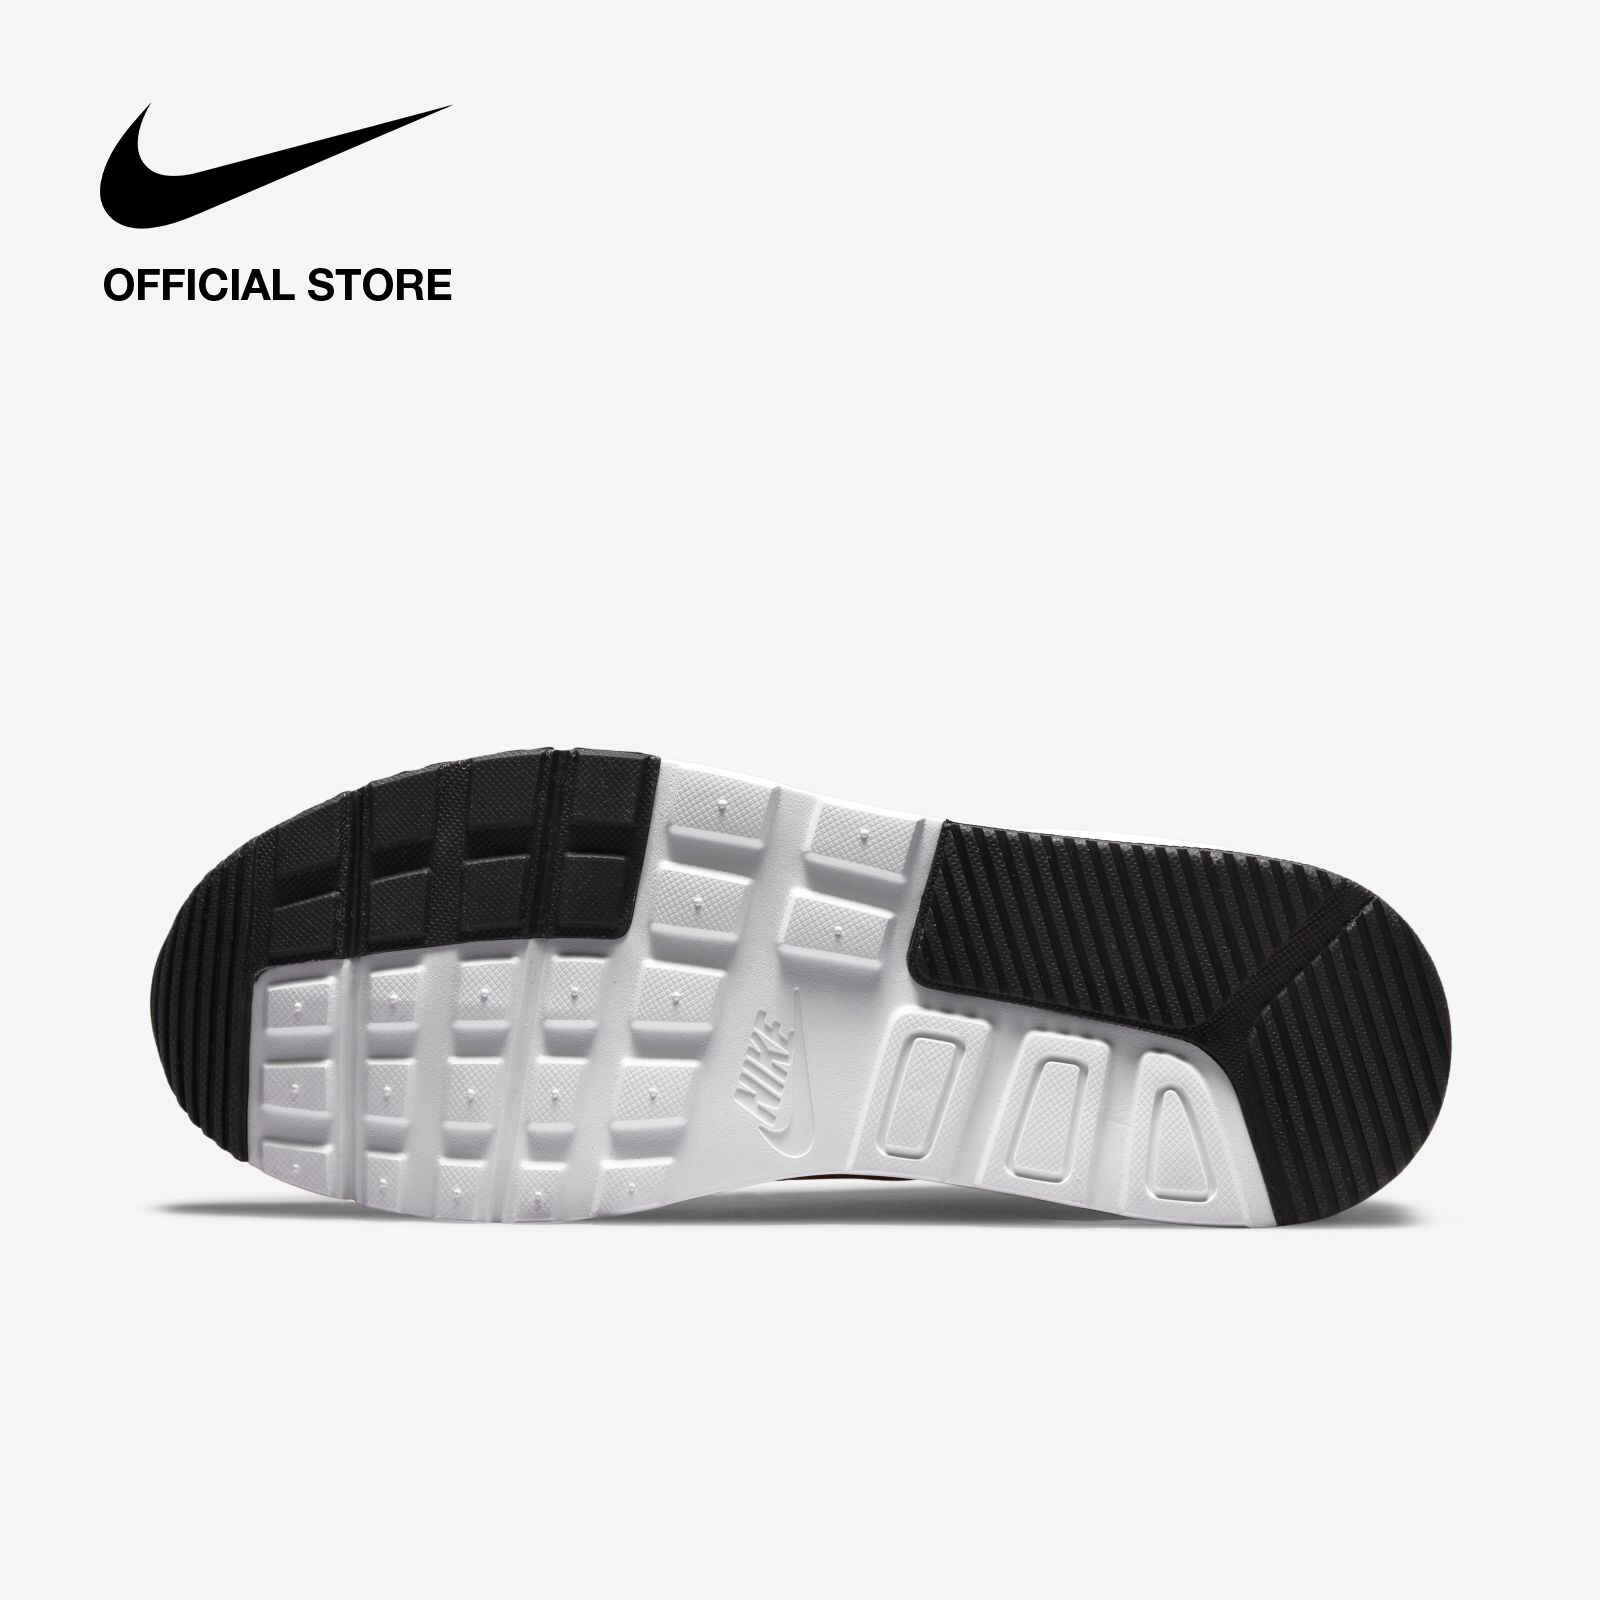 Nike Men's Air Max SC Shoes - Black รองเท้าผู้ชาย Nike Air Max SC - สีดำ